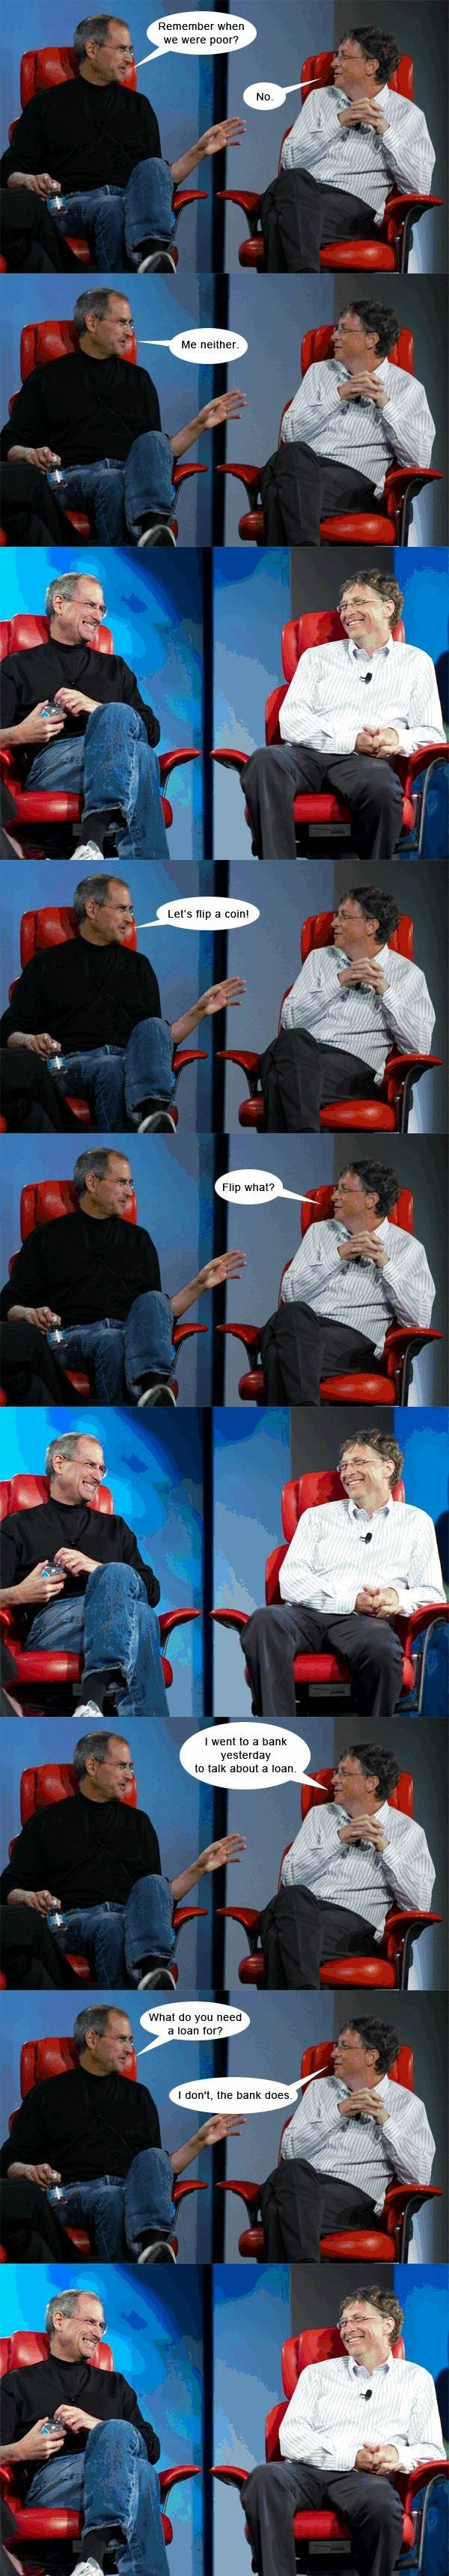 Steve Jobs and Bill Gates finally agree.